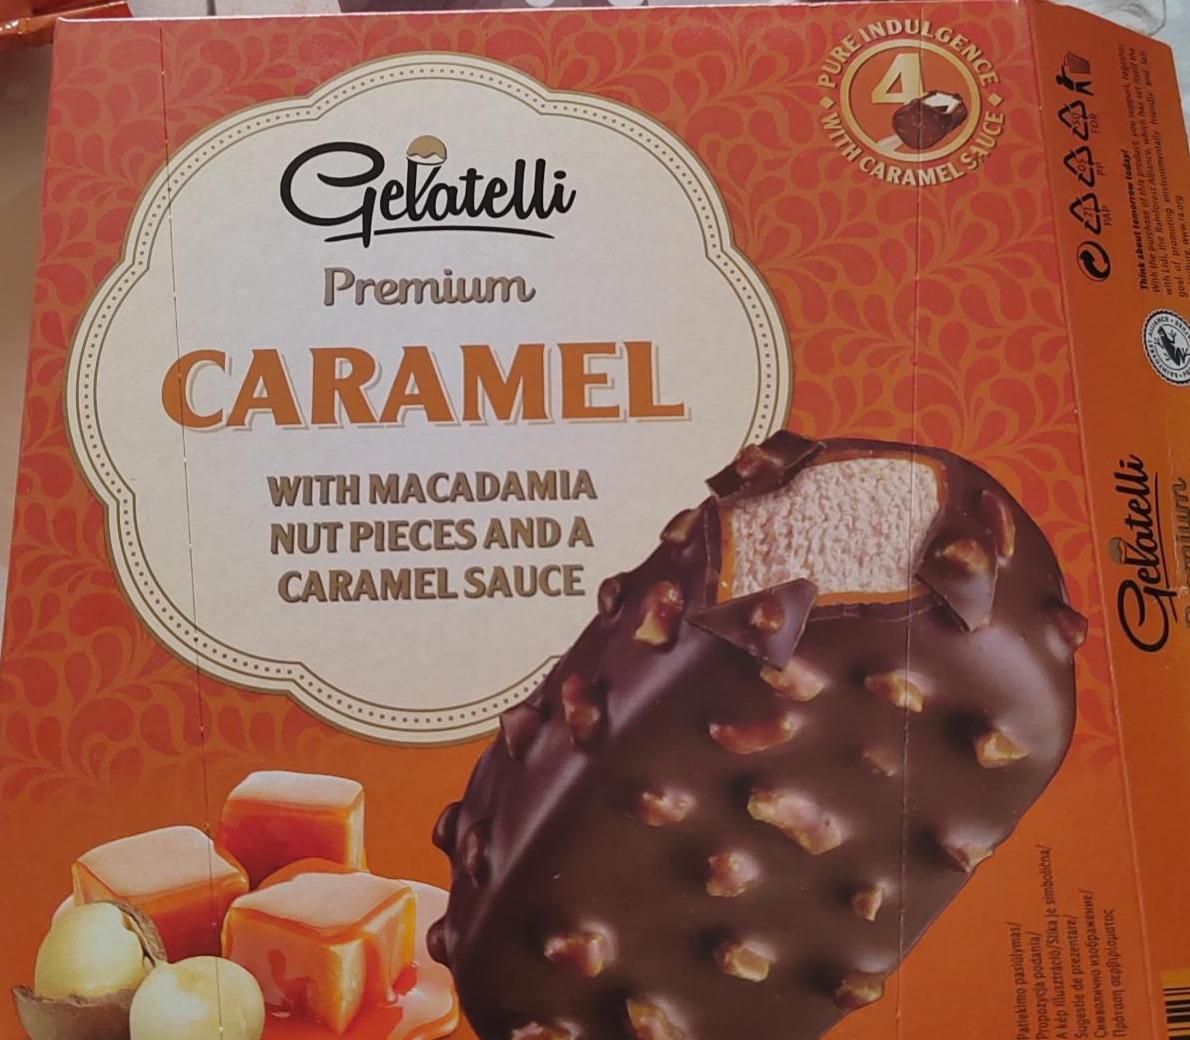 Képek - Premium caramel with macadamia nut pieces and a caramel sauce Gelatelli